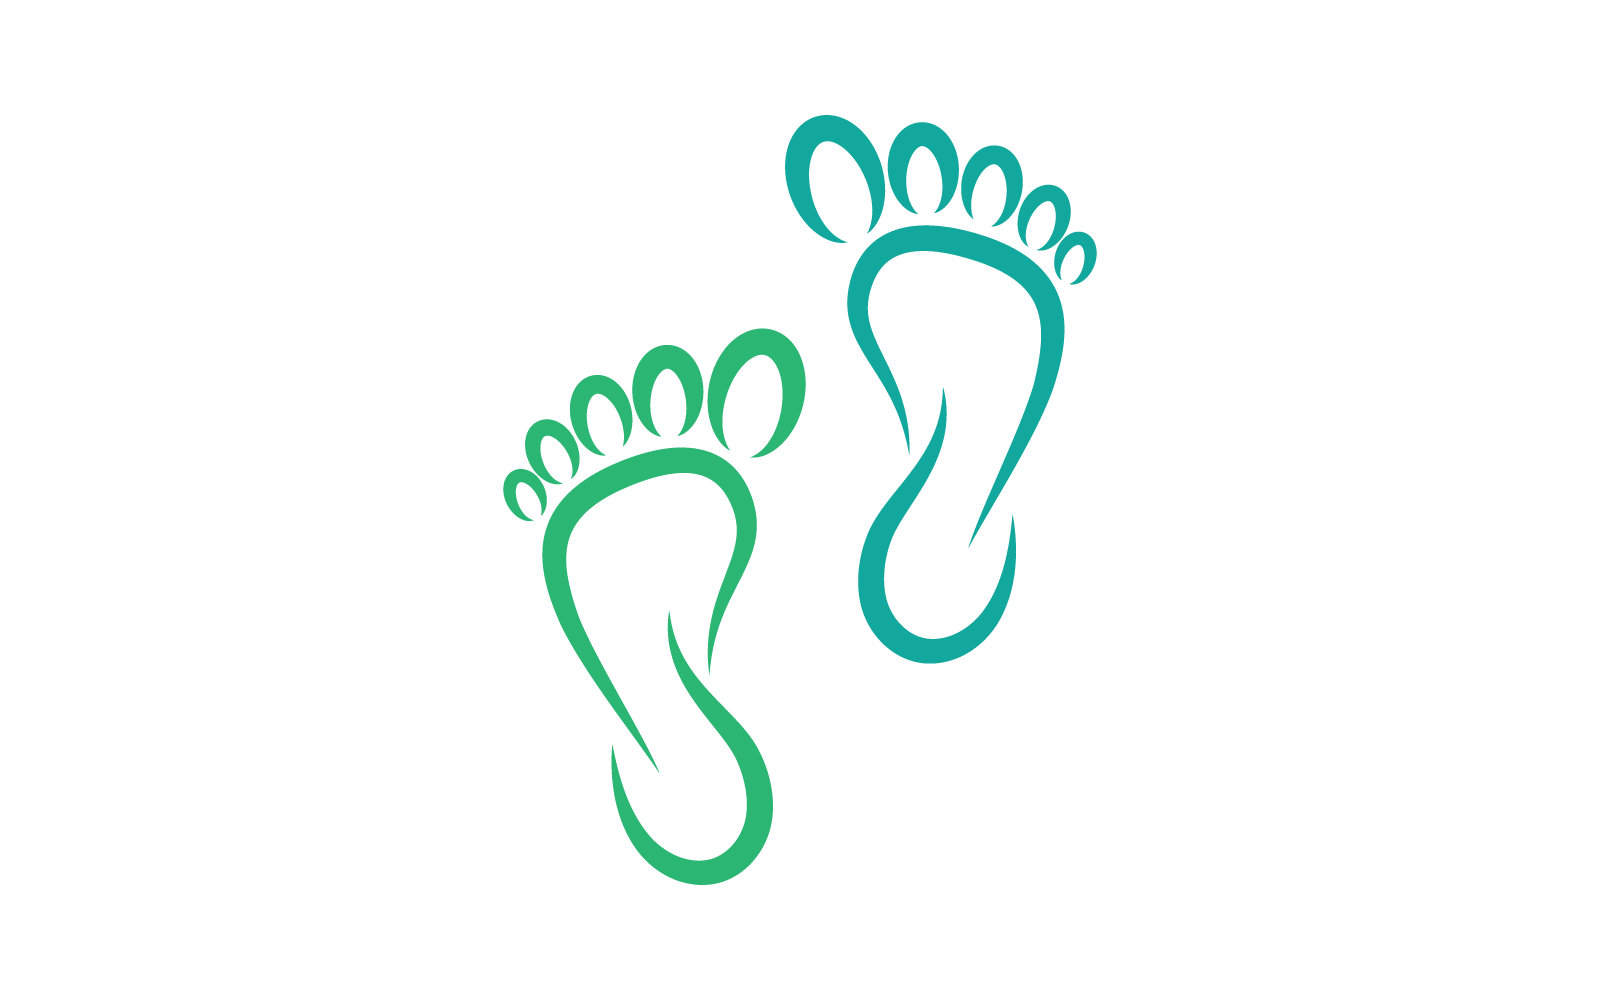 Foot care illustration logo vector design Logo Template